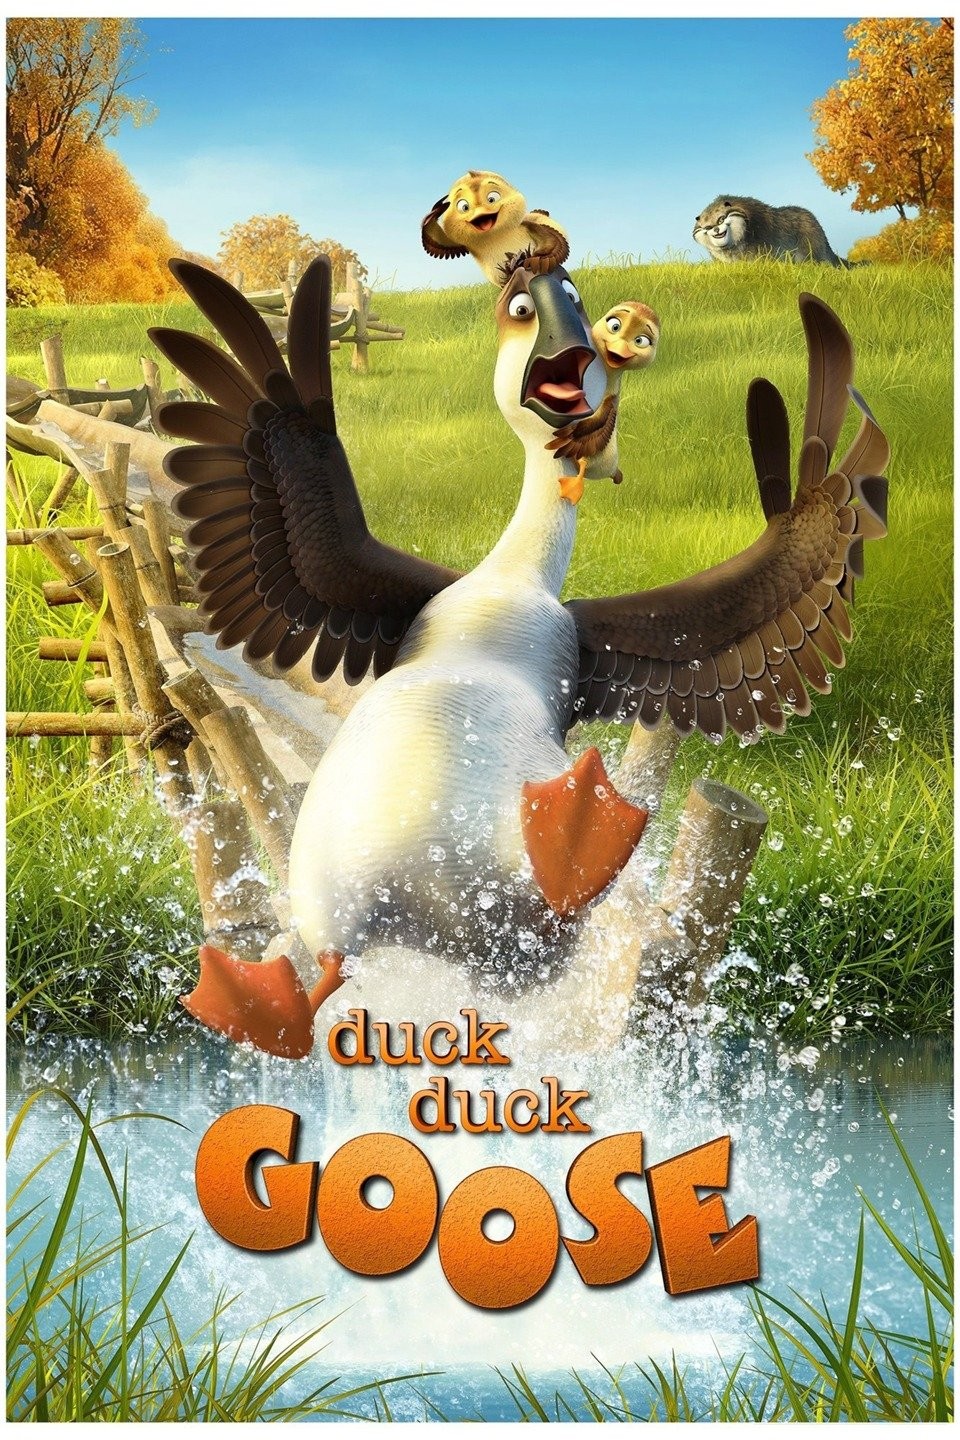 Duck Life 9 - Announcement Trailer 